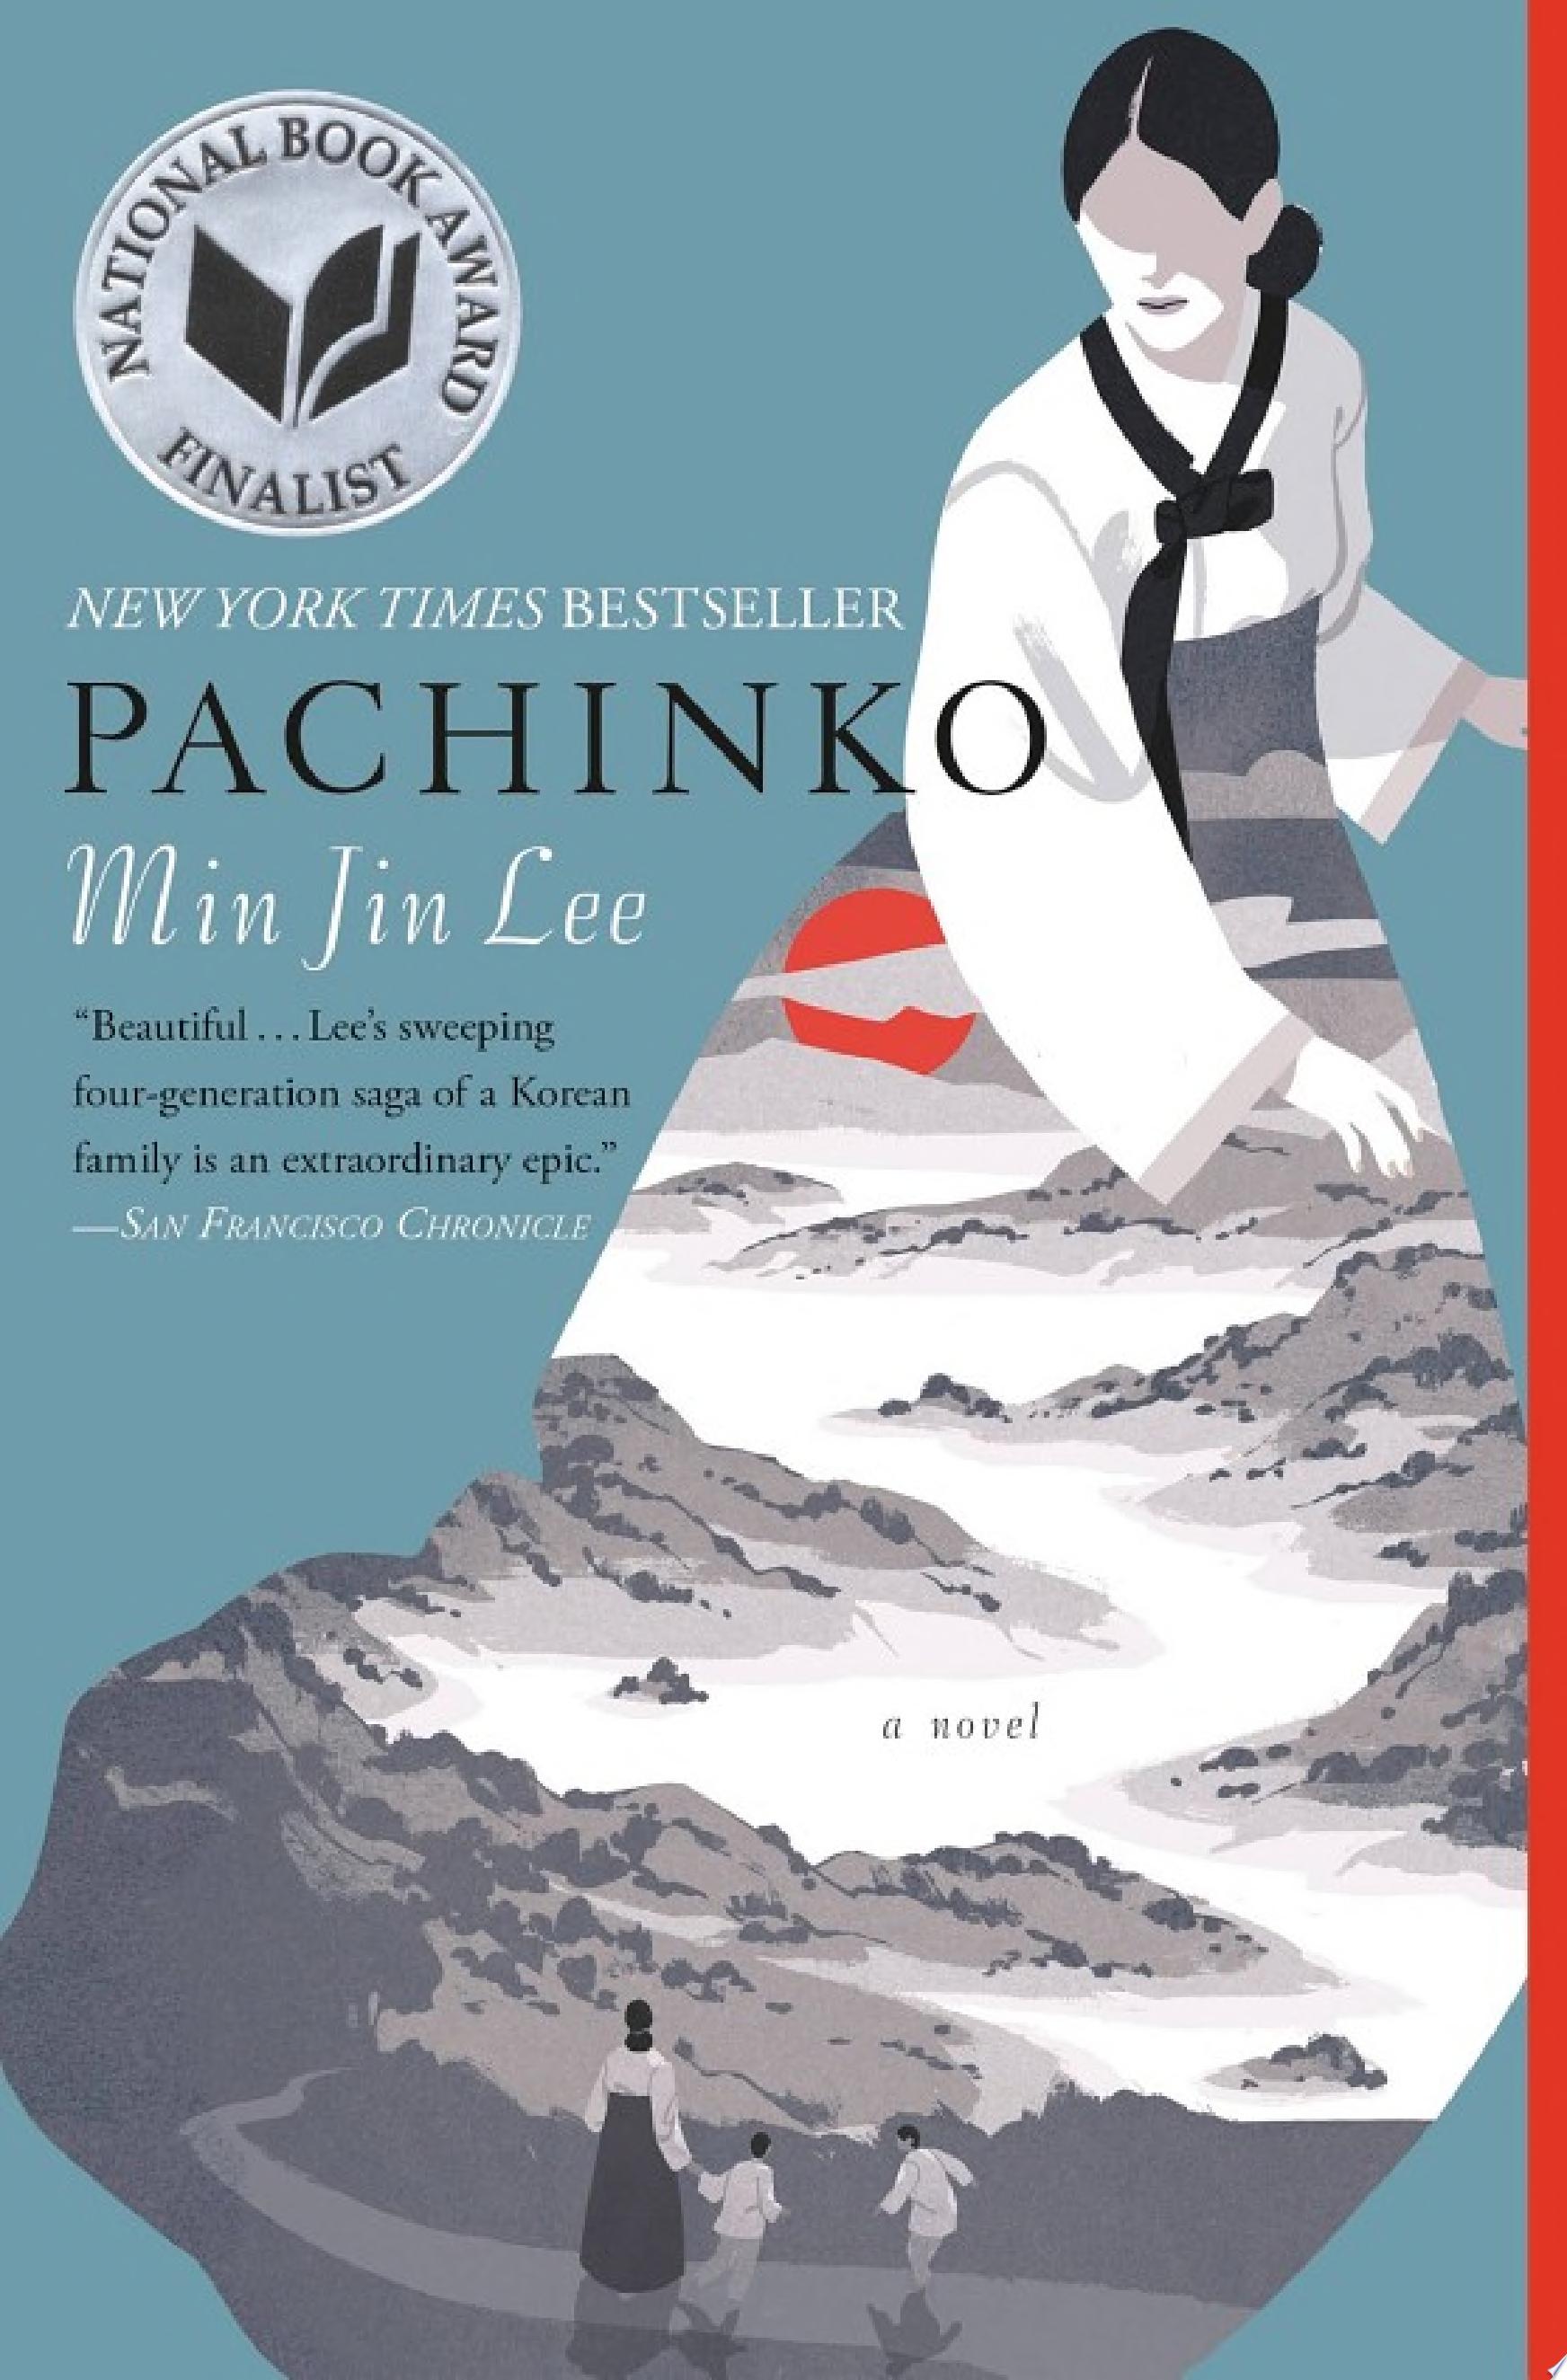 Image for "Pachinko (National Book Award Finalist)"